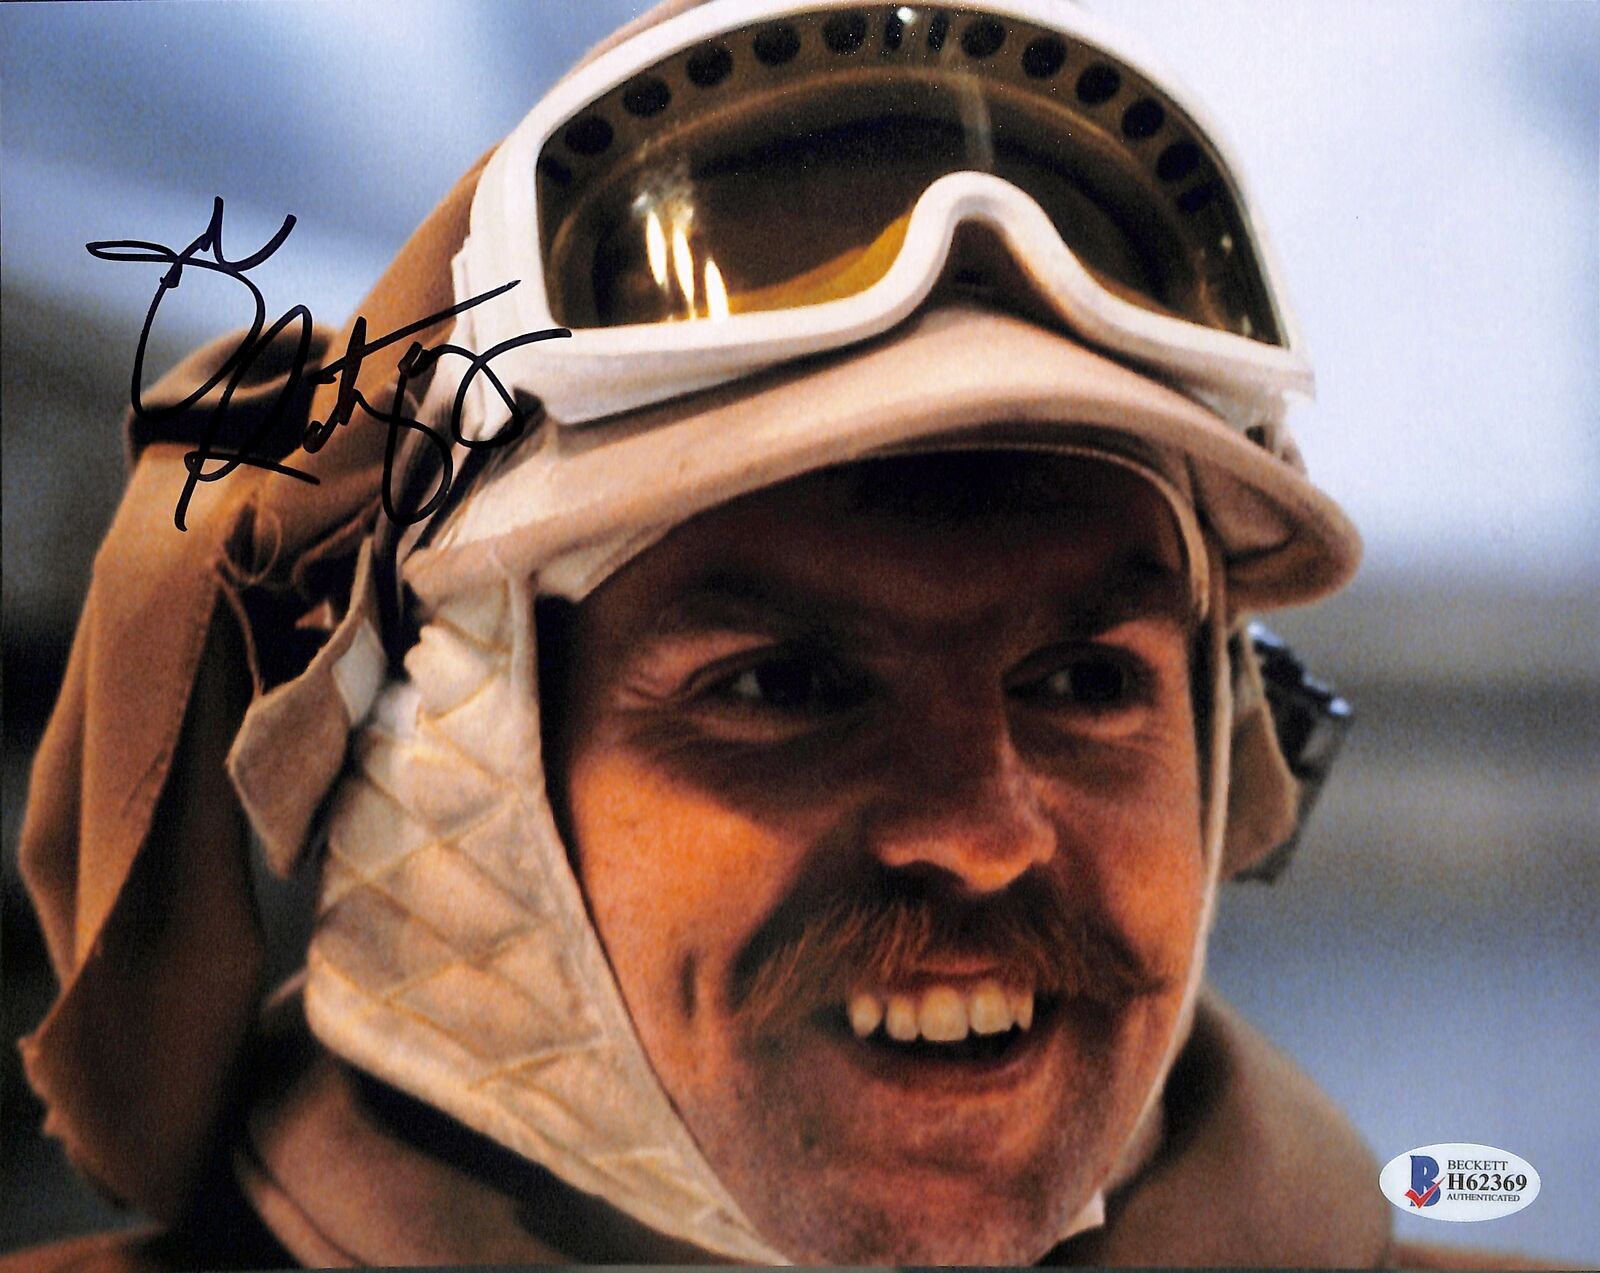 John Ratzenberger Star Wars Empire Strikes Back Signed 8x10 Photo Bas H62369 Autographia